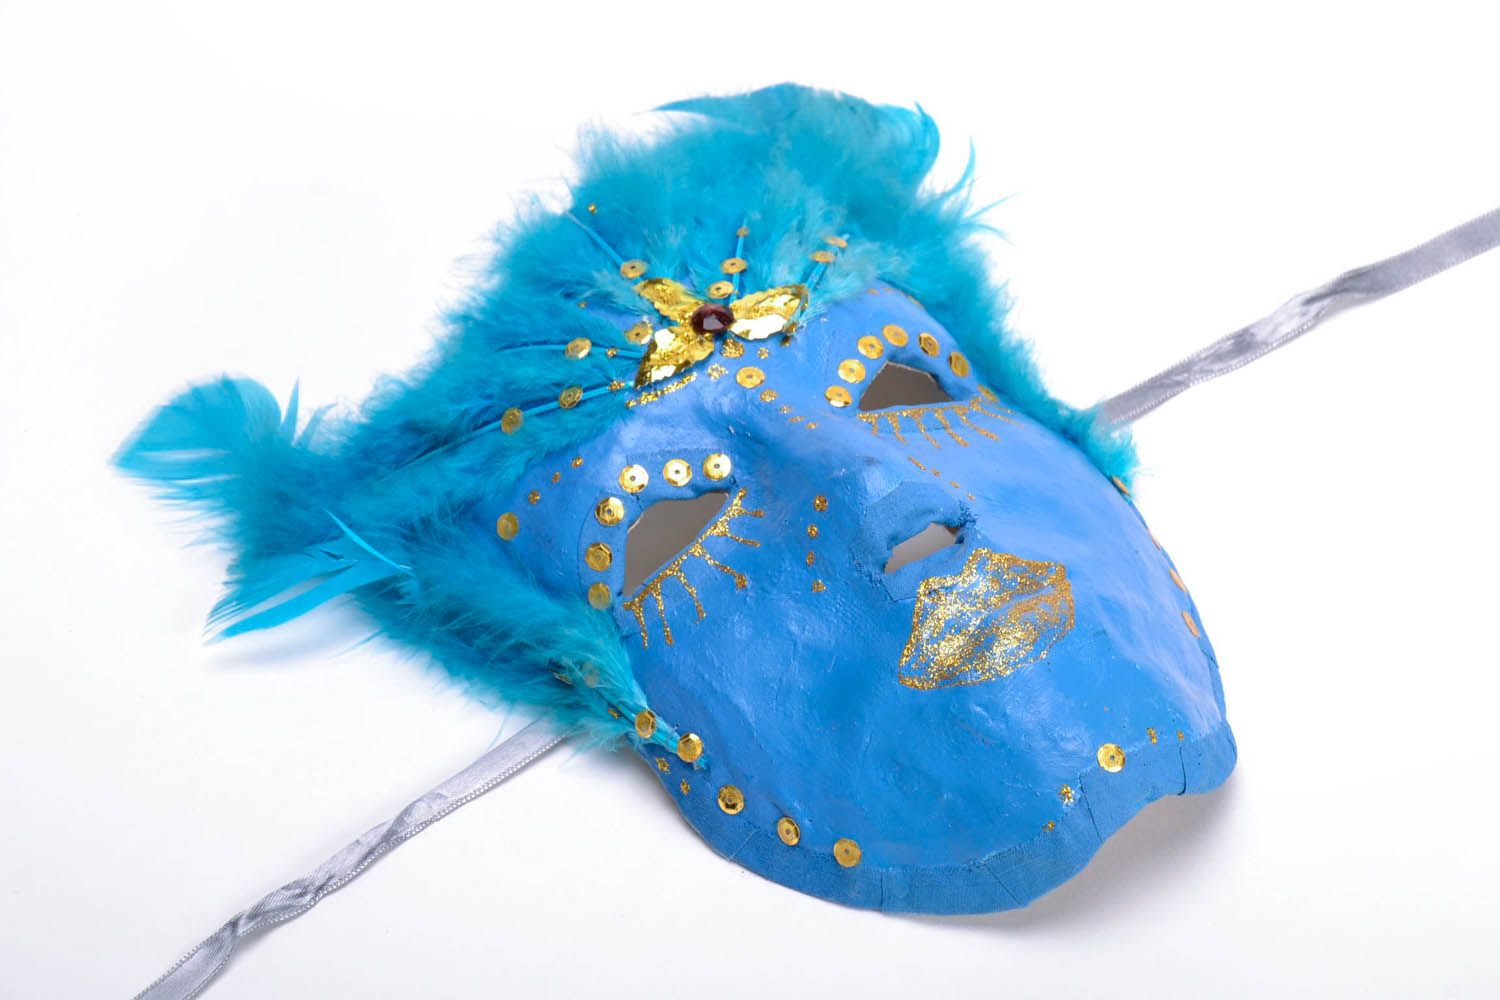 Maschera di carnevale decorativa fatta a mano in gesso decorazione da parete  foto 2